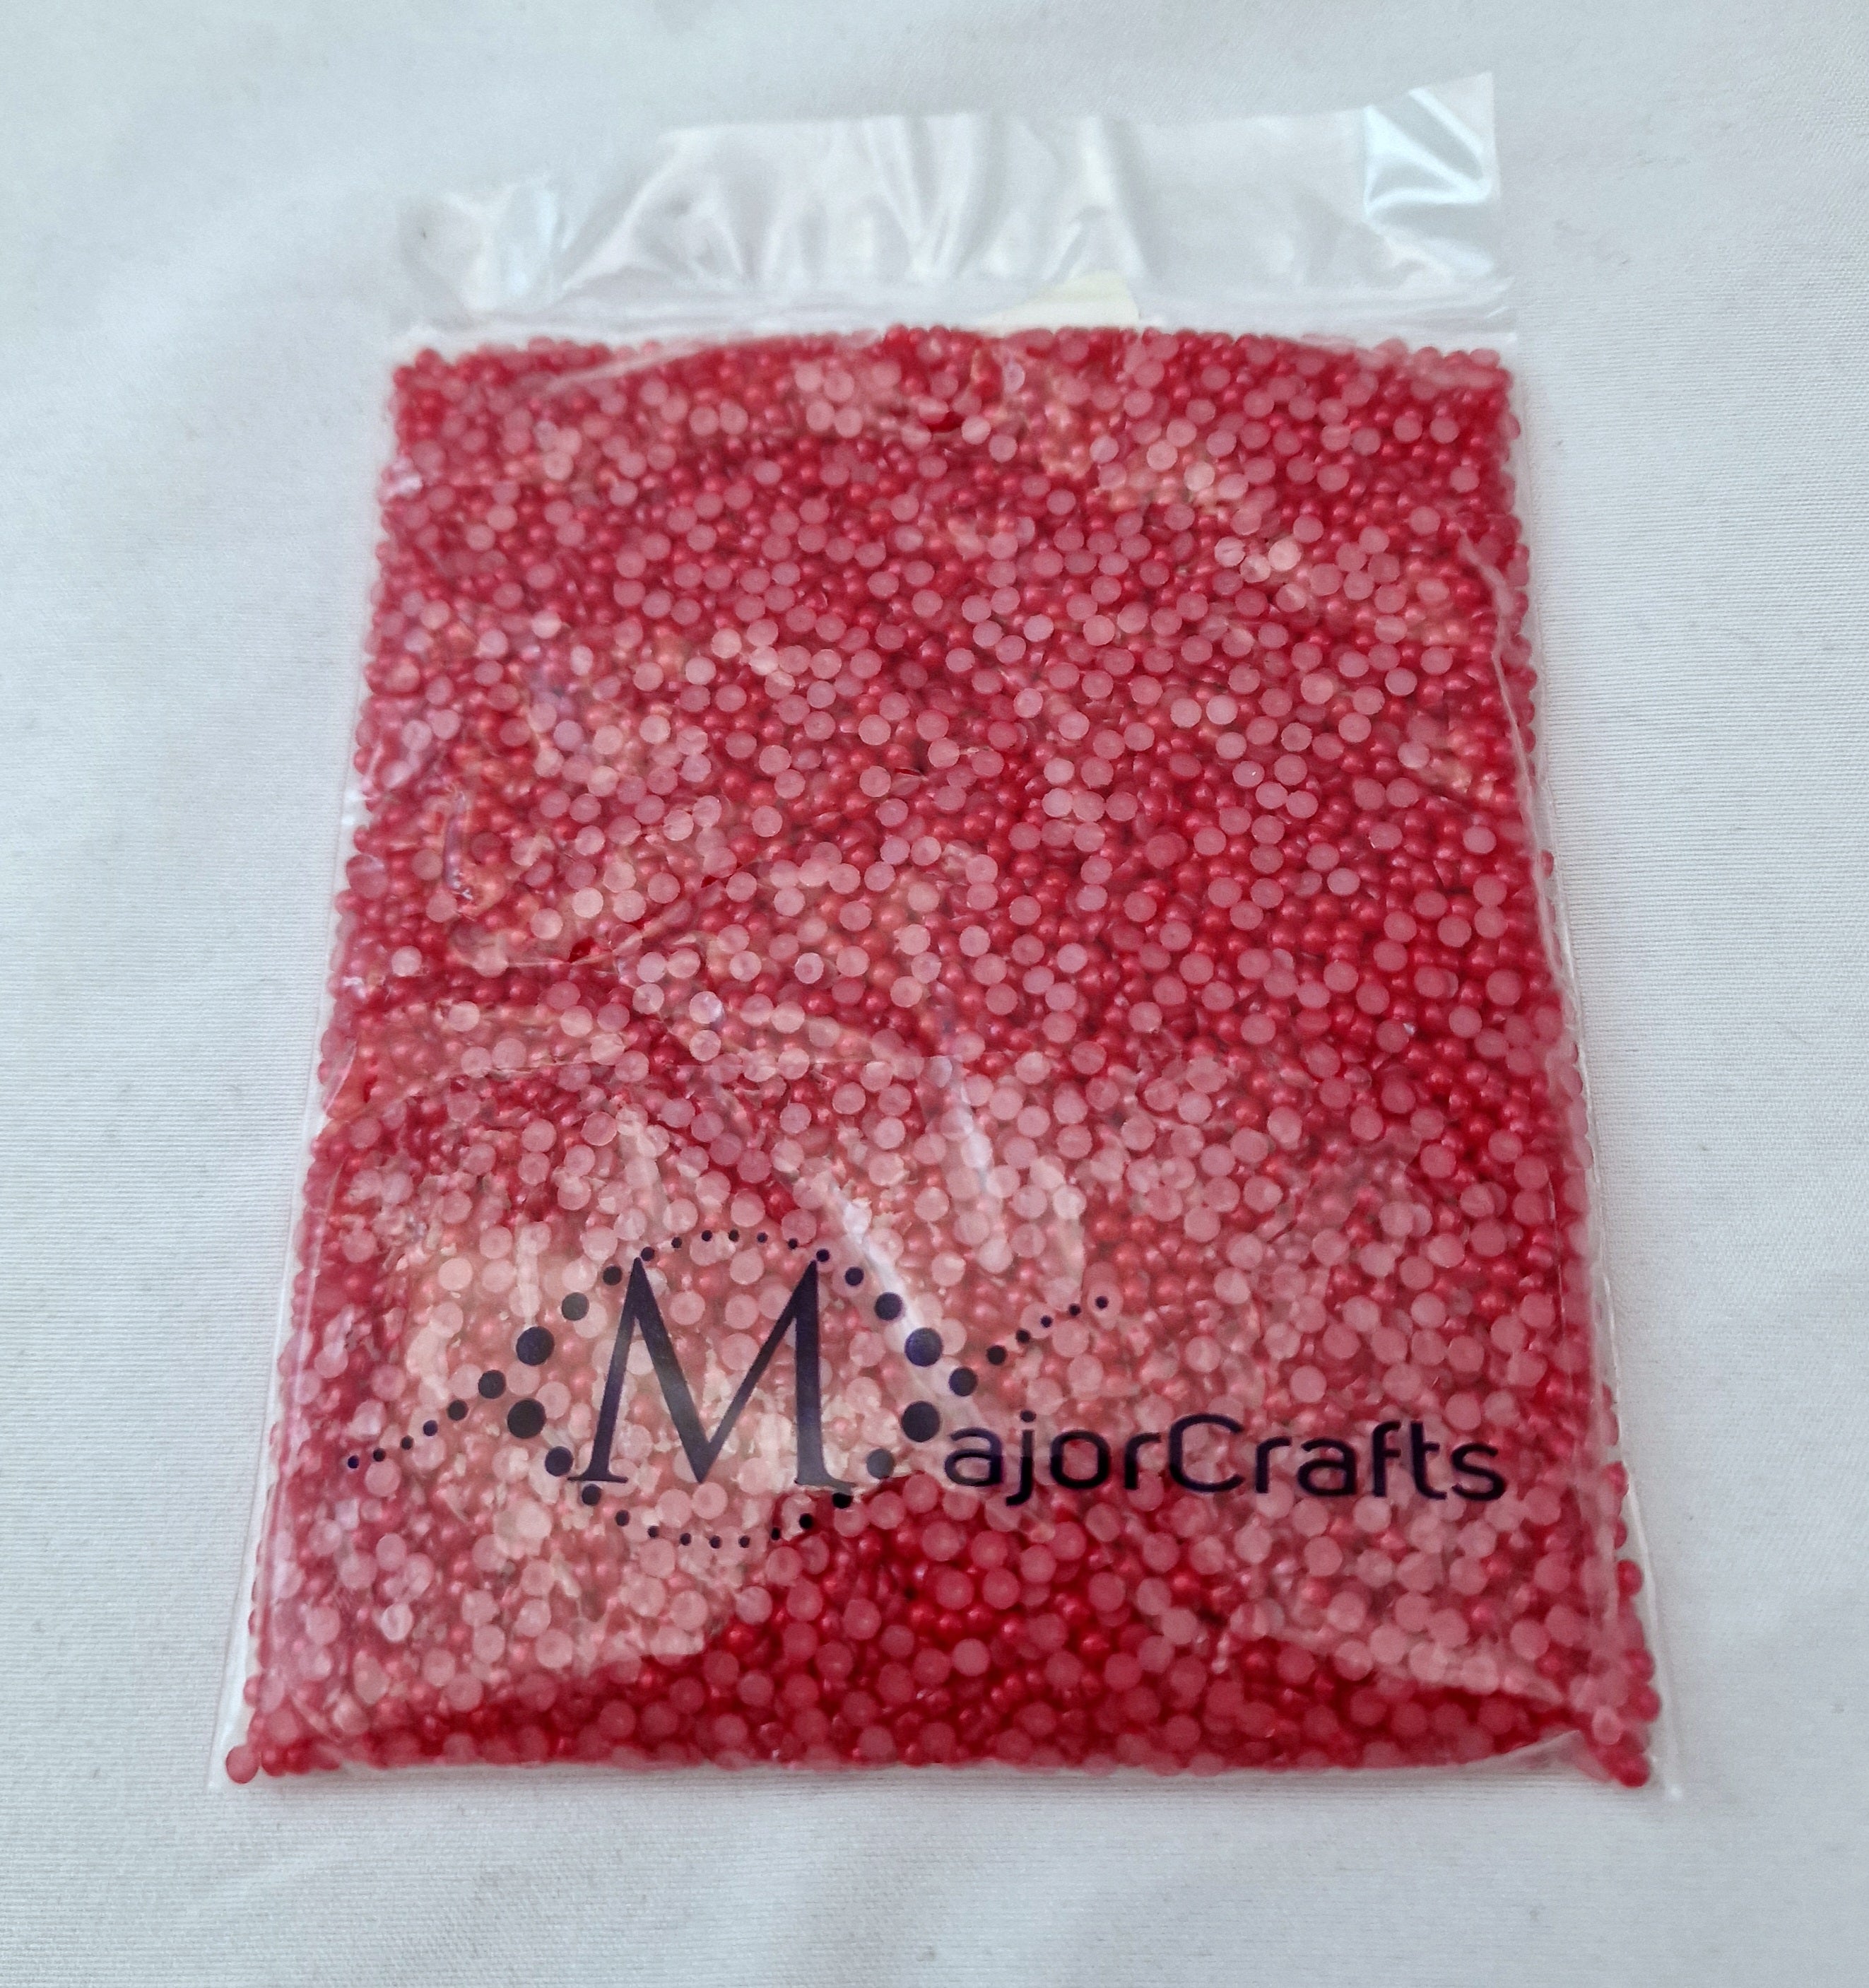 MajorCrafts Red Flat Back Half Round Resin Embellishment Pearls C23